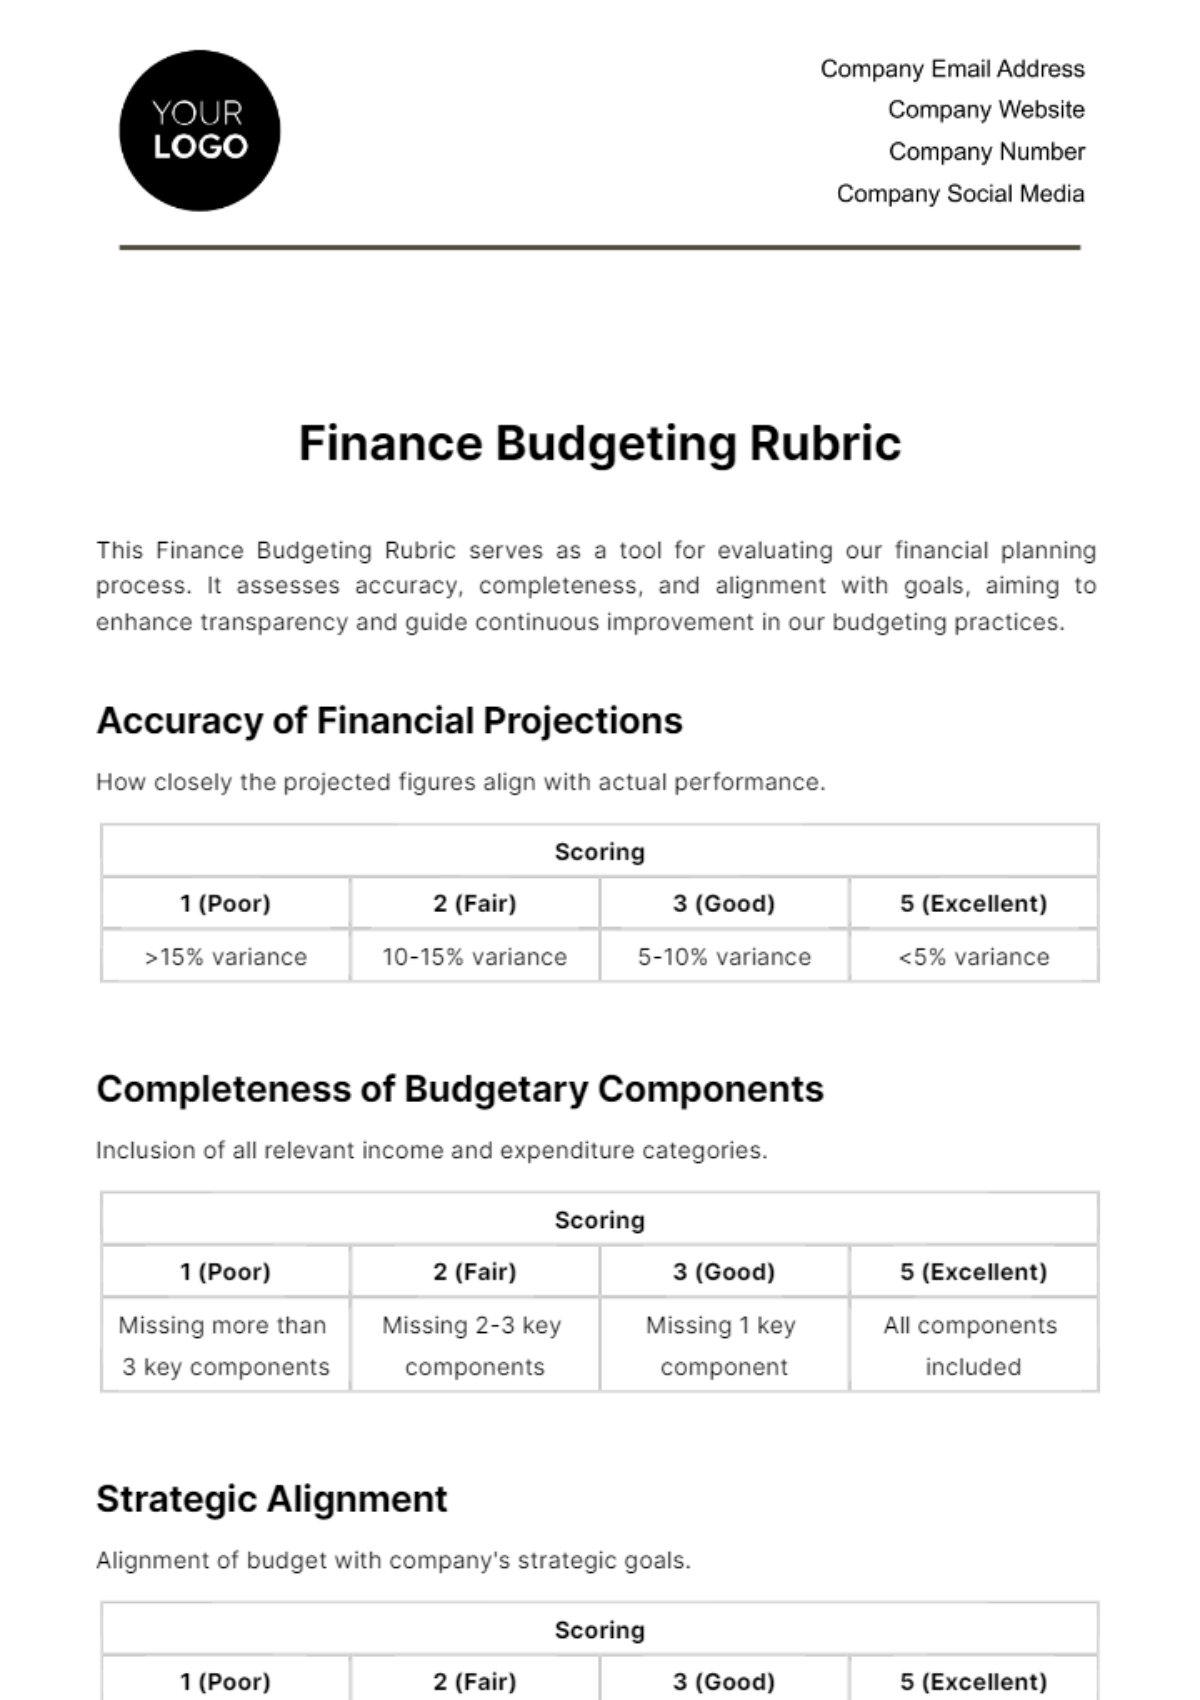 Finance Budgeting Rubric Template